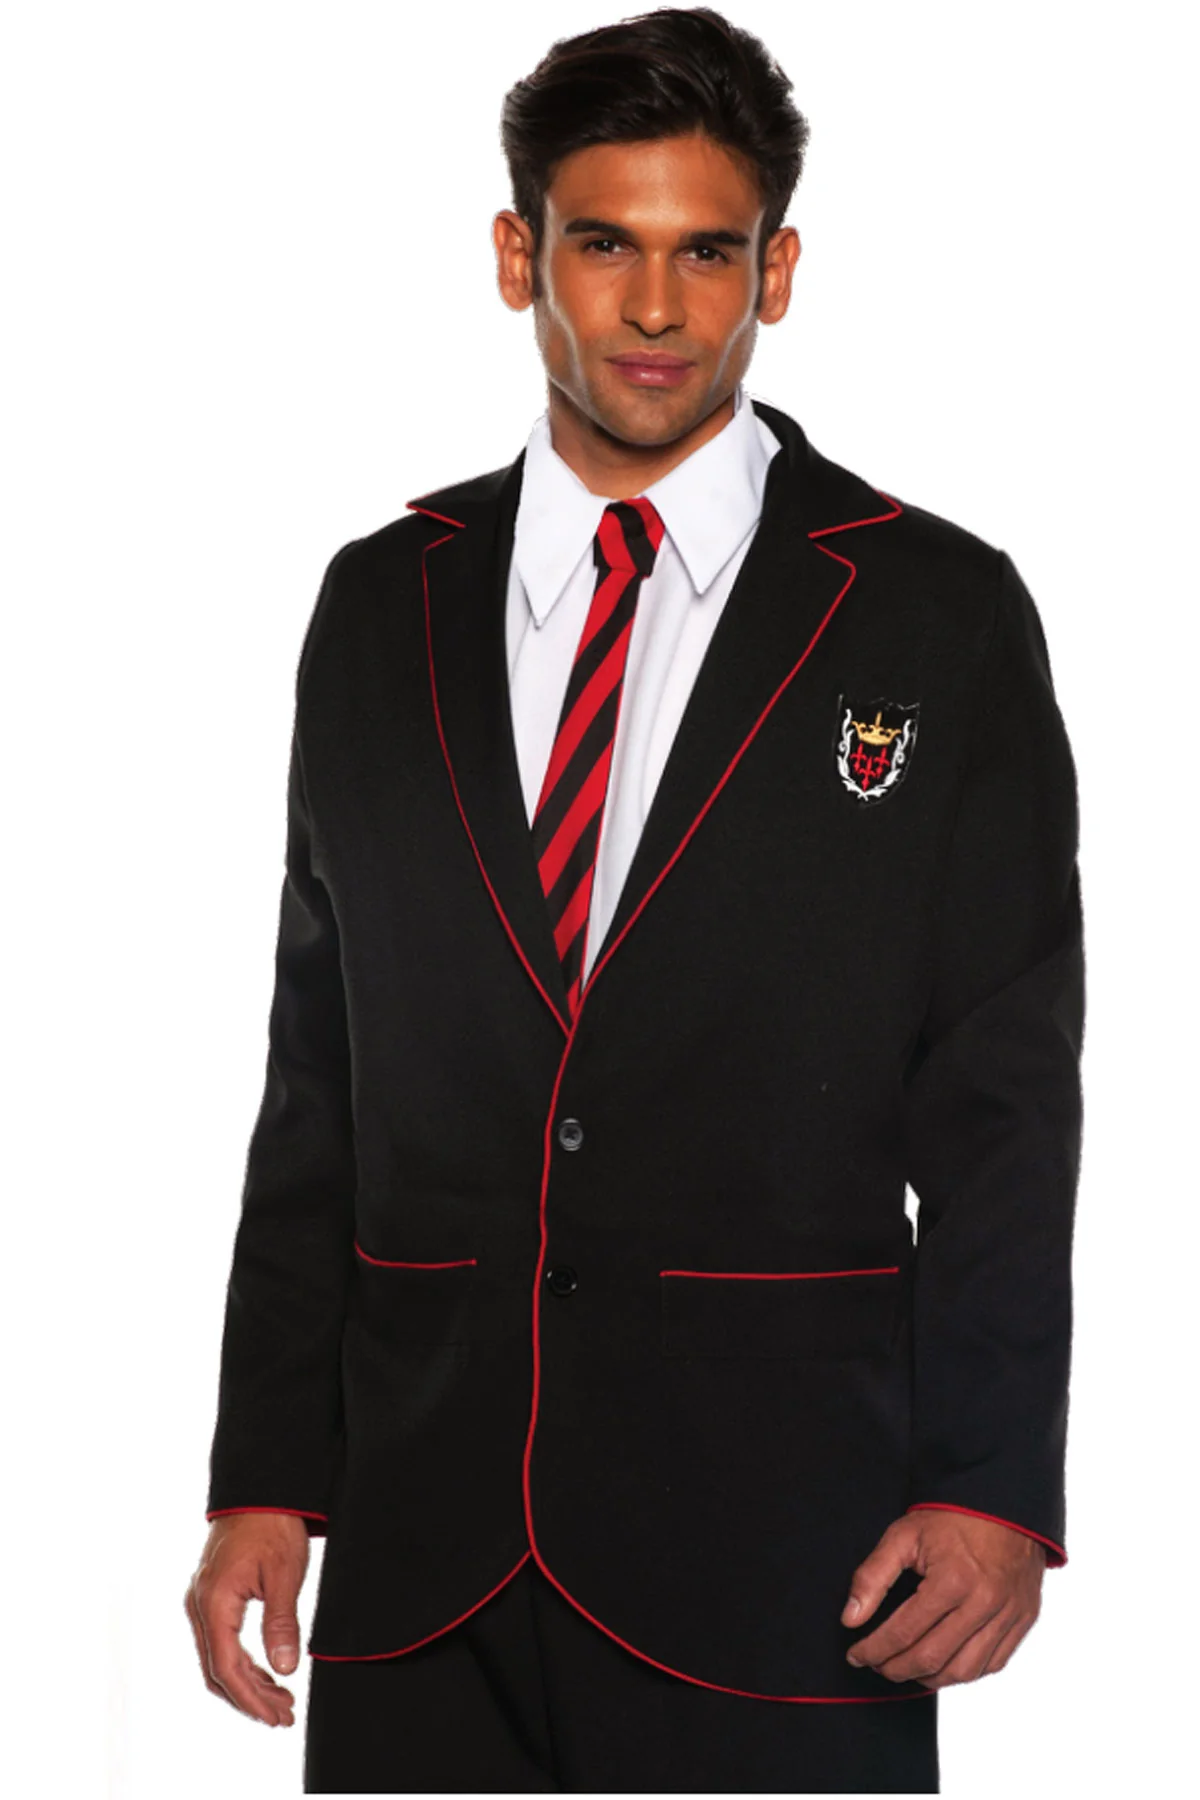 Black & Red Anime Academy School Uniform Jacket Men's Adult Costume